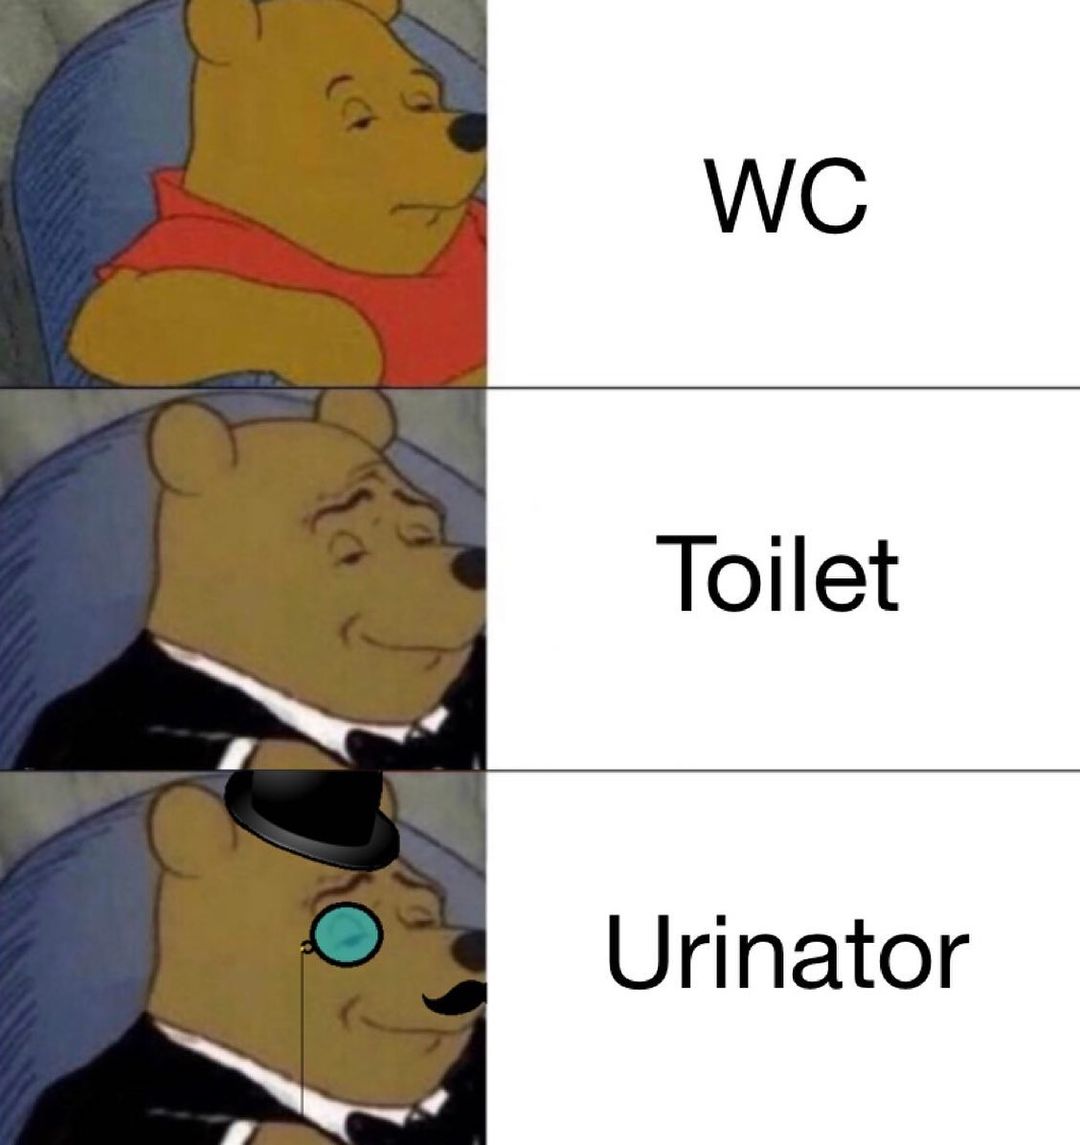 WC. Toilet. Urinator.